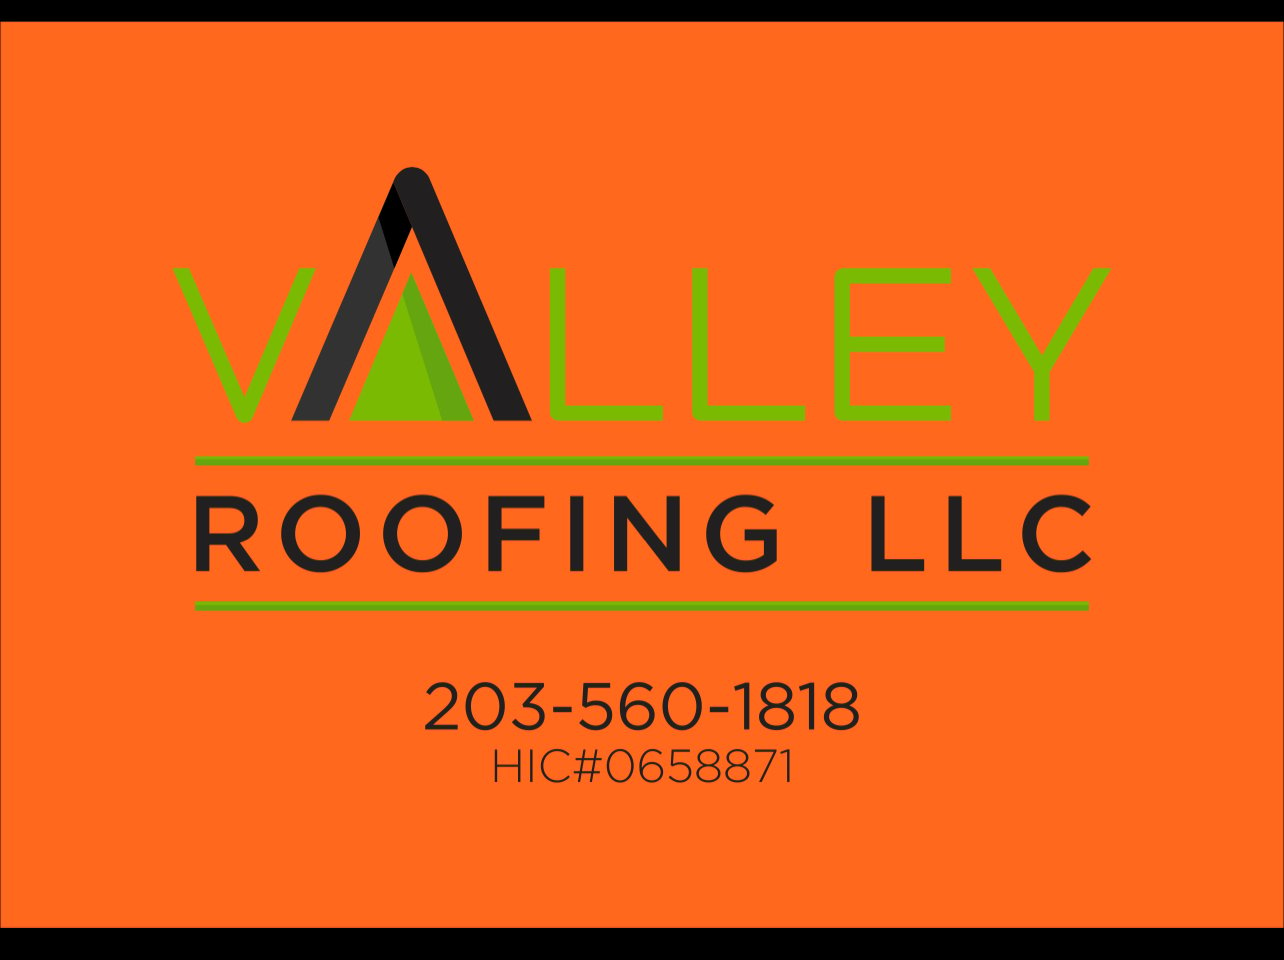 Valley Roofing LLC Logo